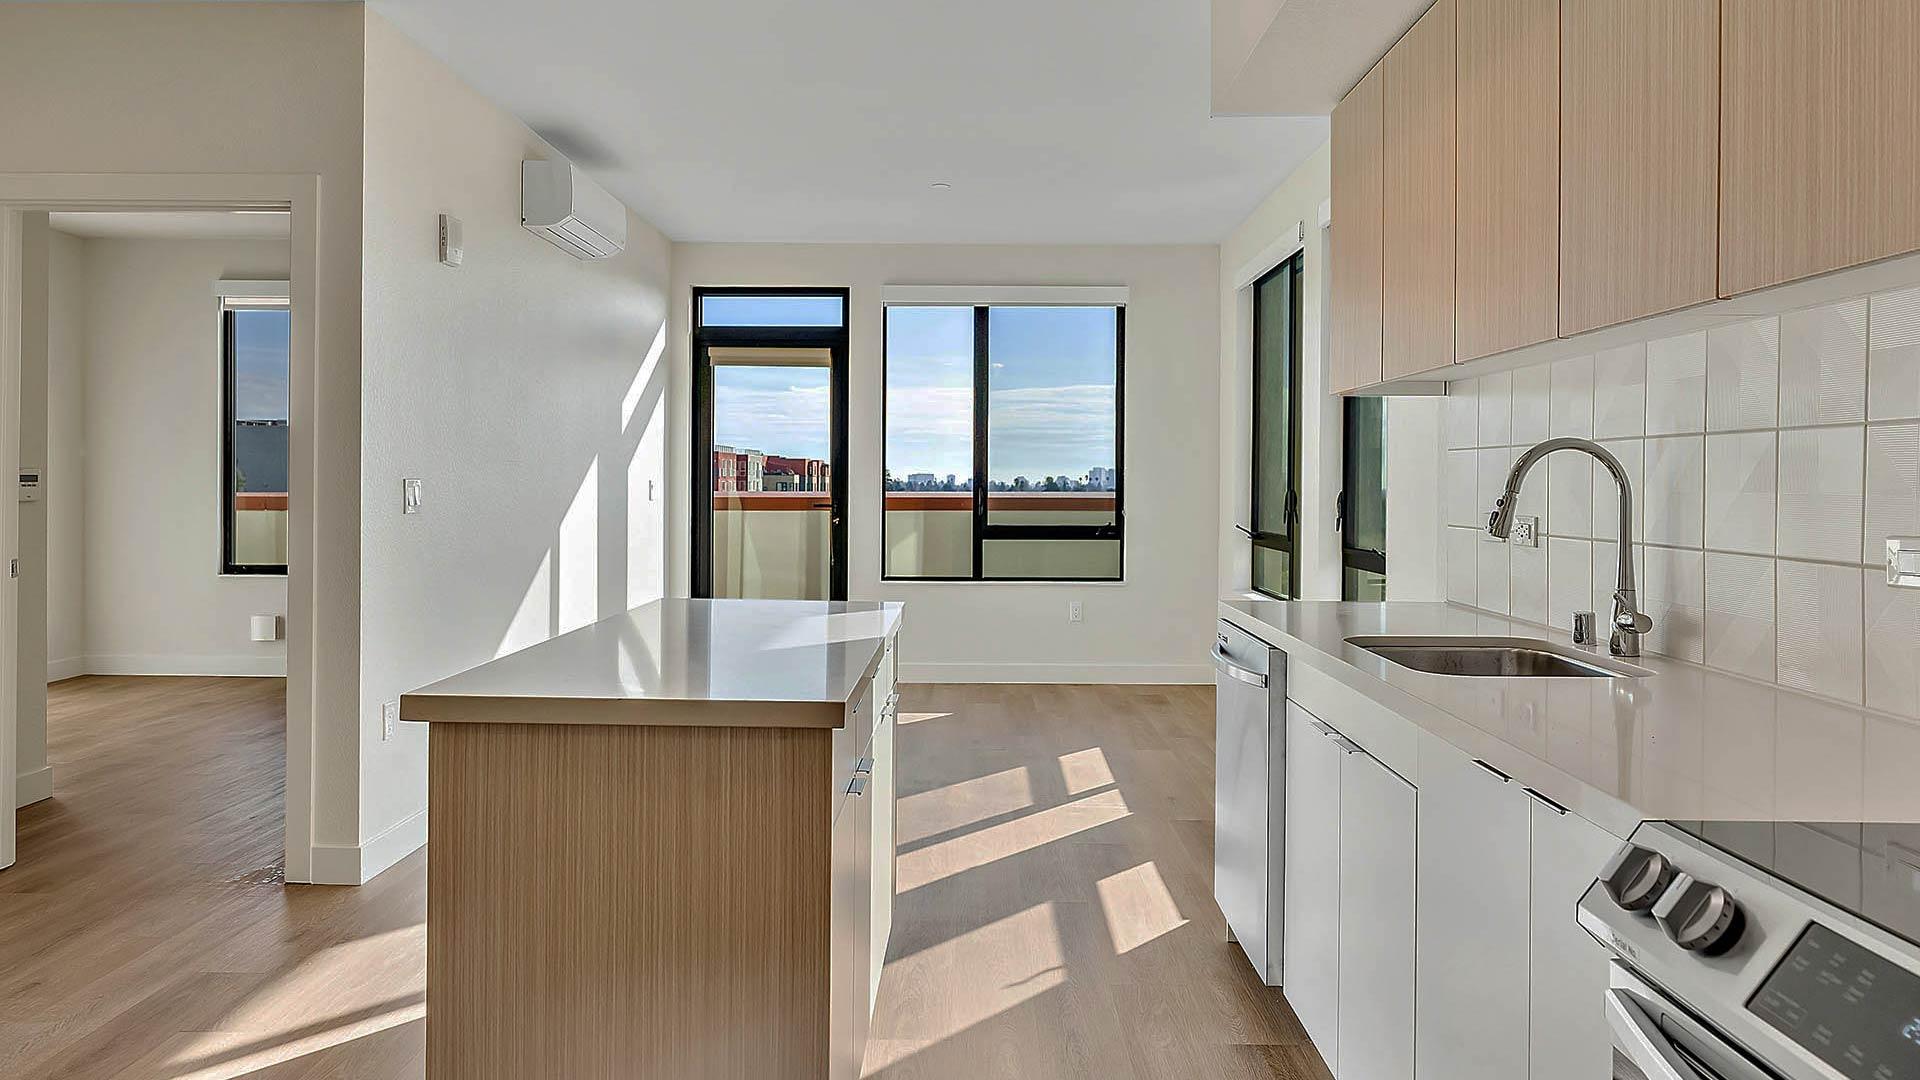 Blake apartments b5 floorplan kitchen view 1